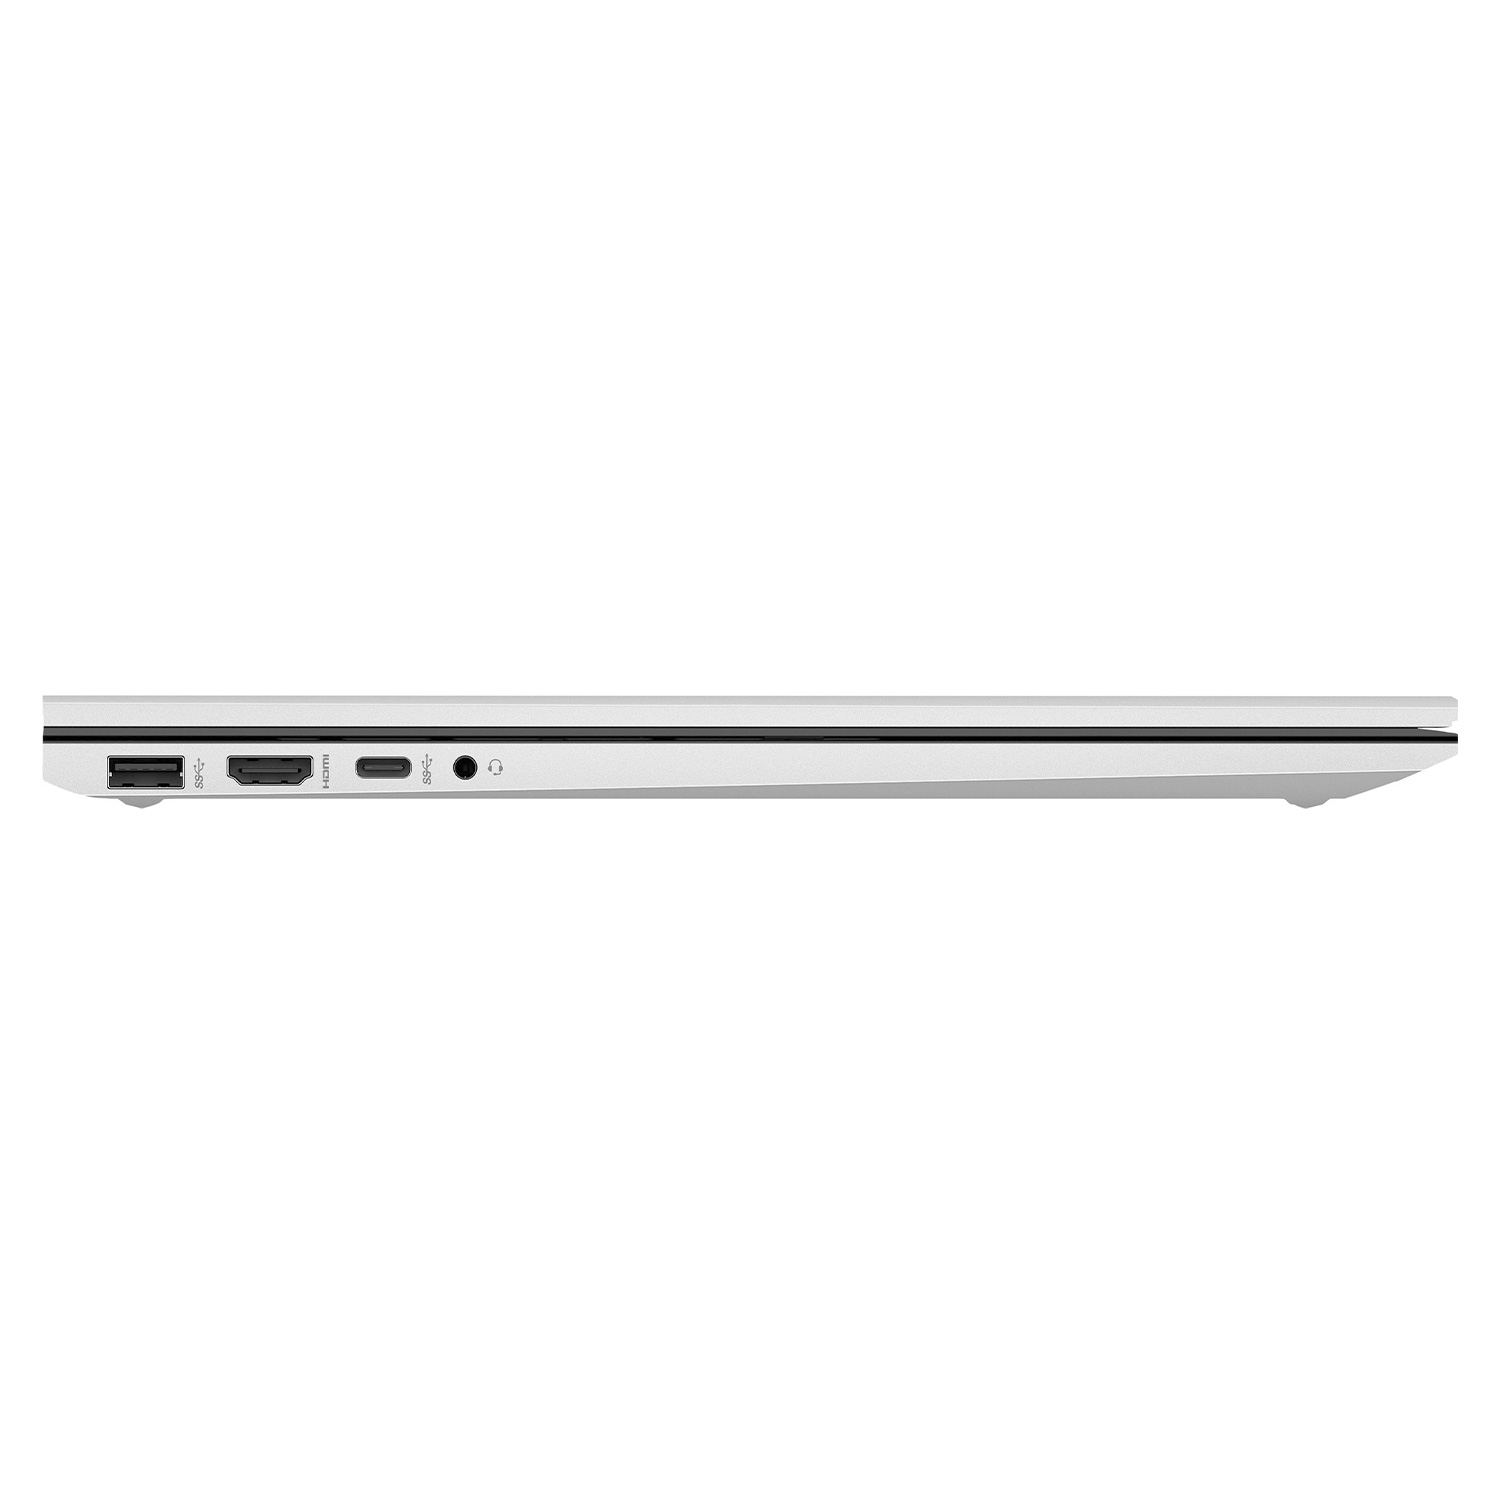 Notebook HP 15-DY4013DX 15.6" Intel Core I5-1155G7 256GB SSD 12GB RAM - Prata